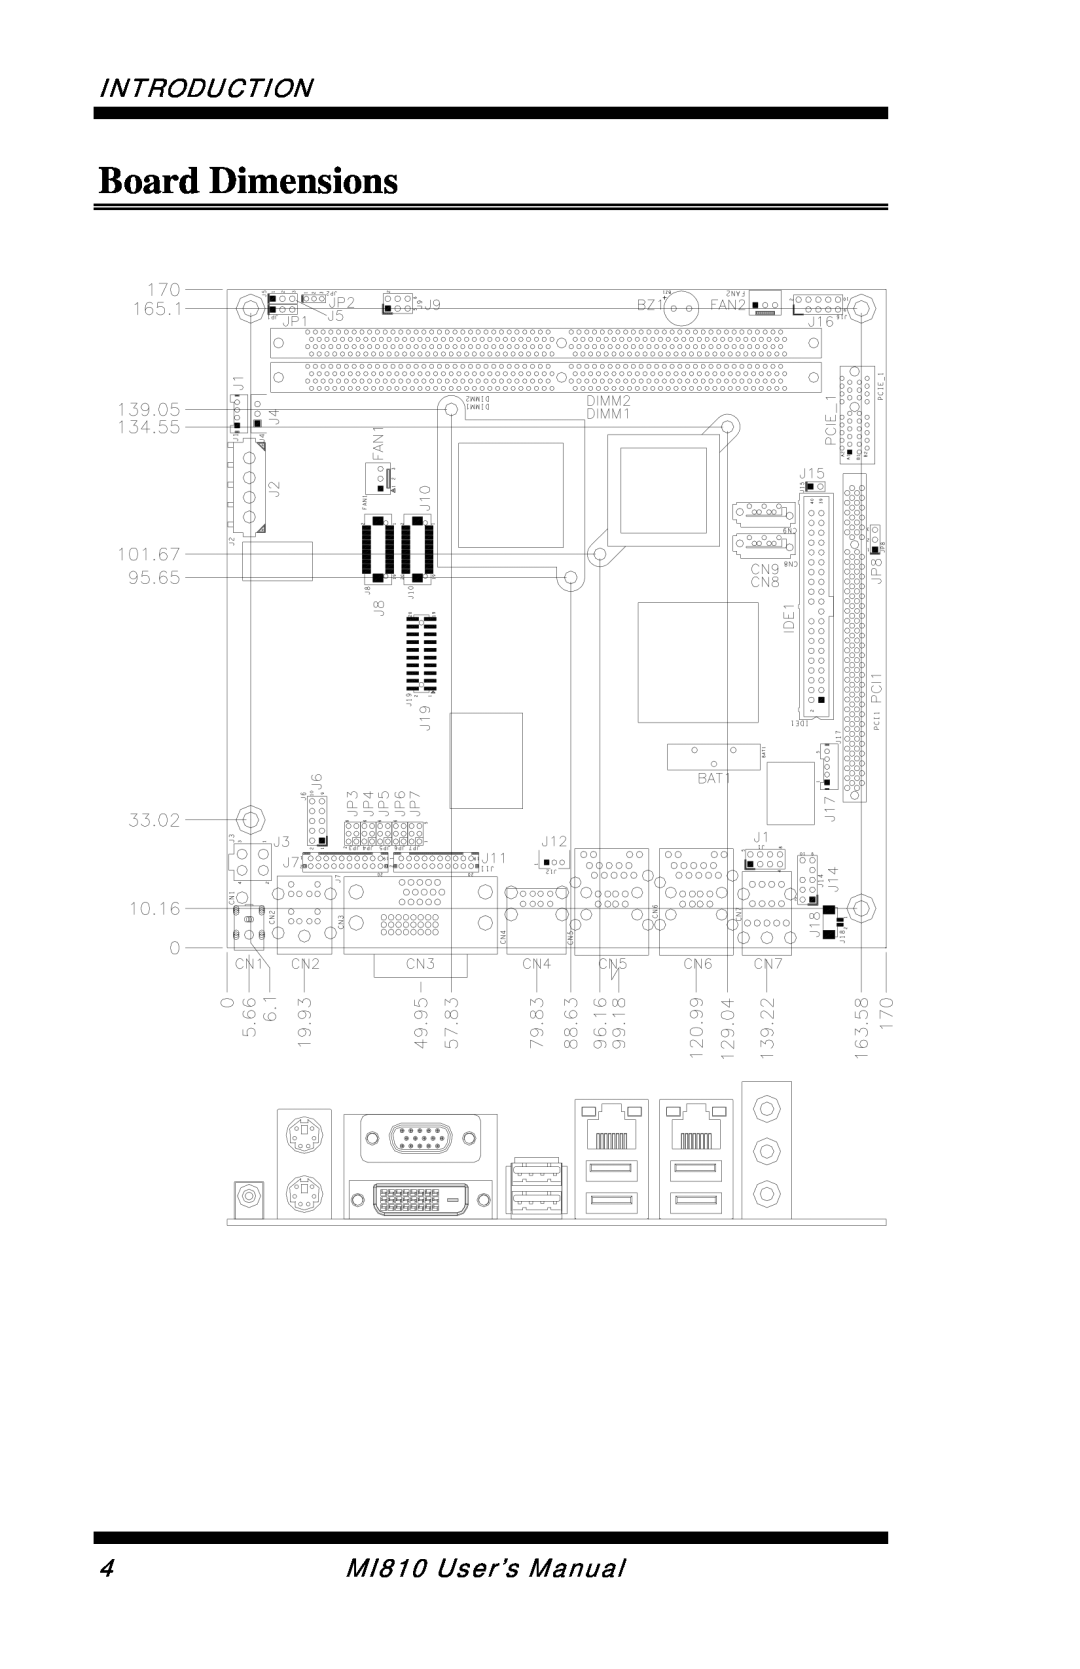 Intel user manual Board Dimensions, Introduction, MI810 User’s Manual 